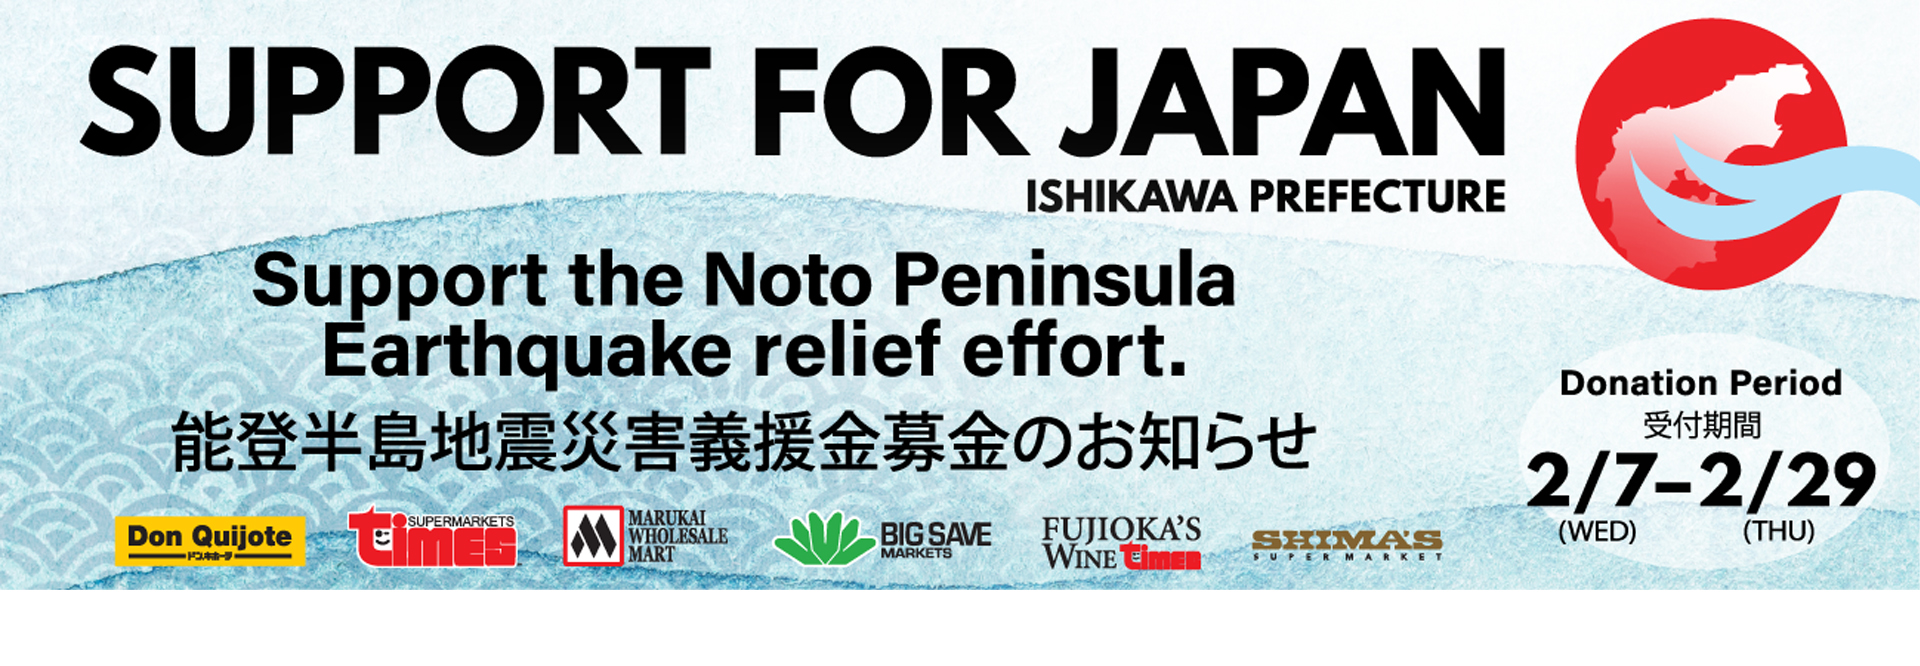 Support for Japan Ishikawa Prefecture